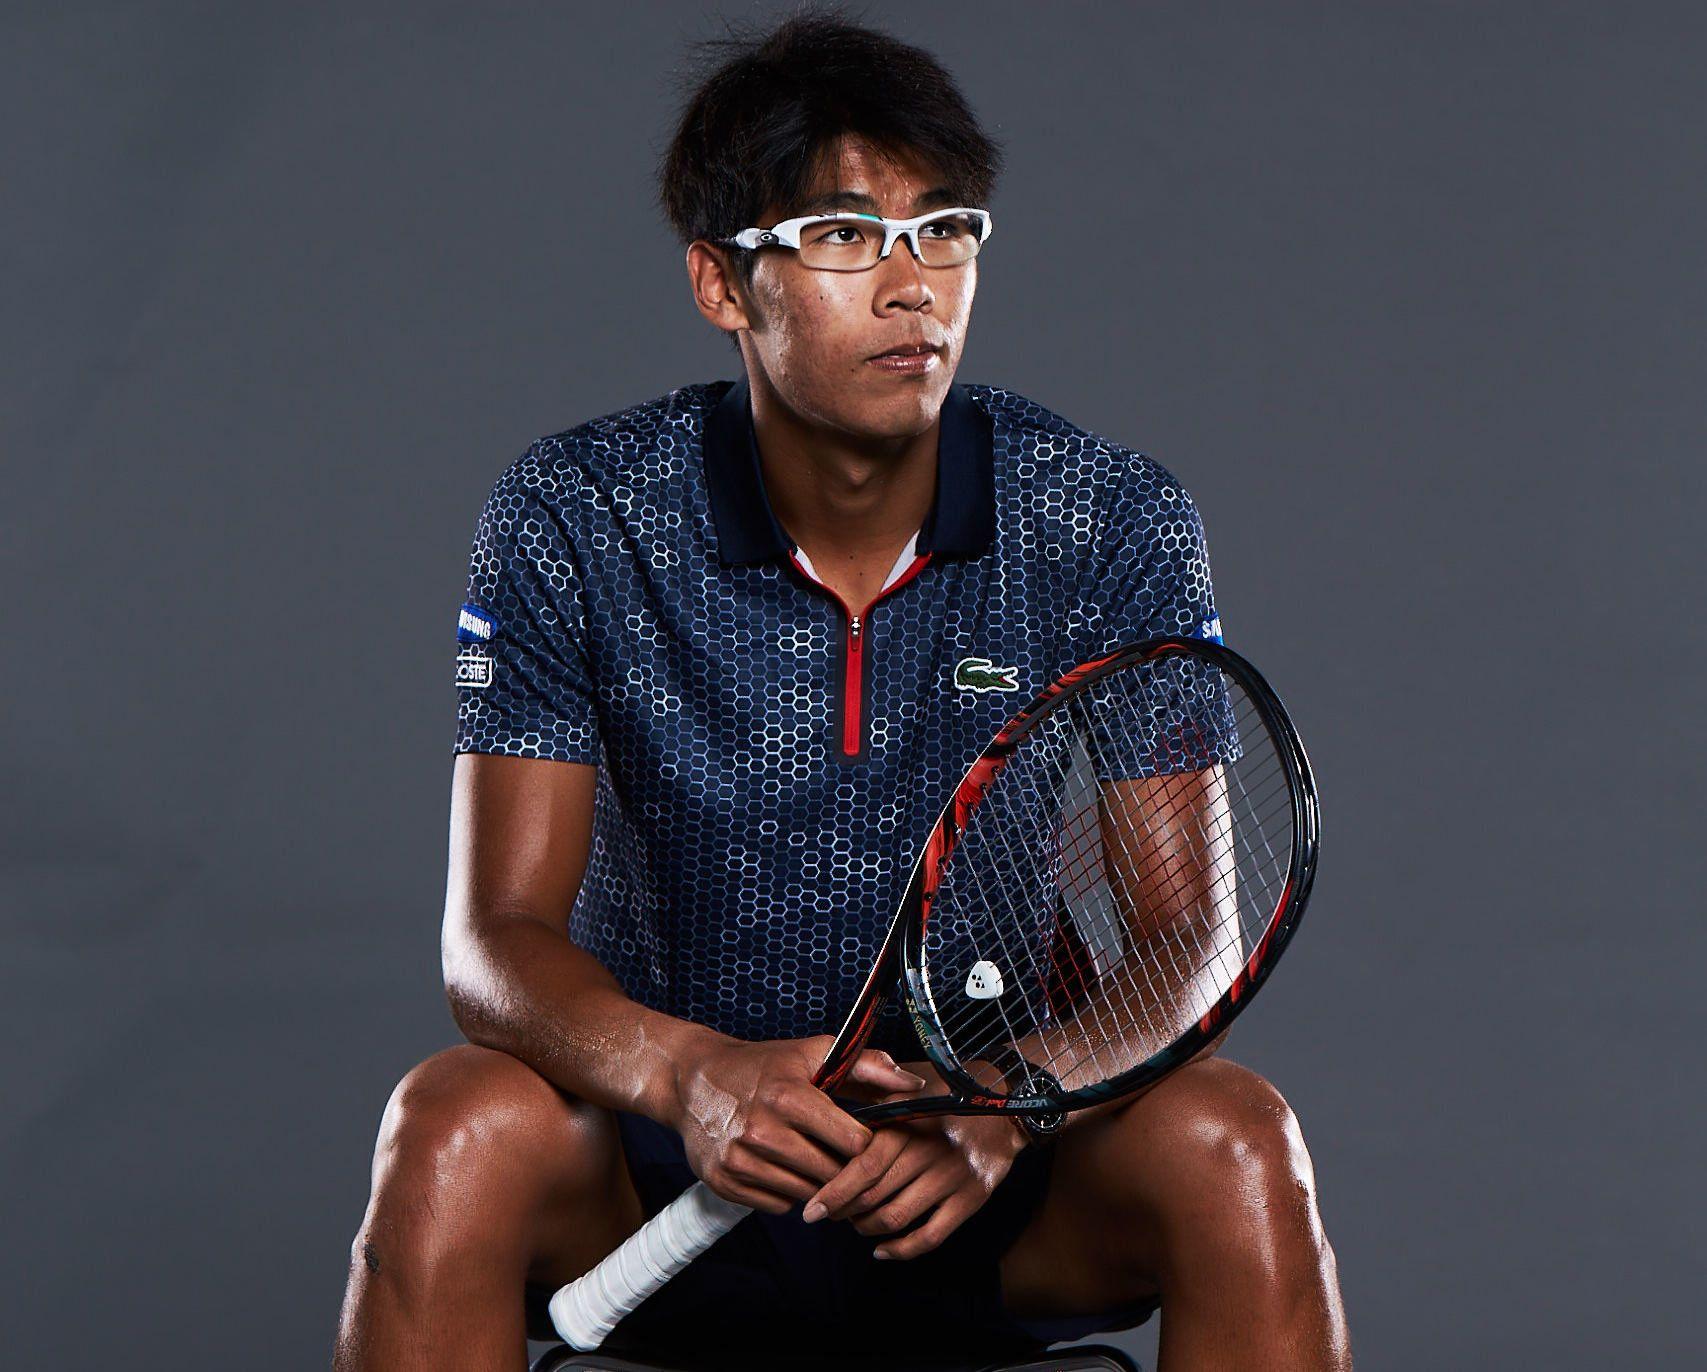 Hyeon Chung's Racquet